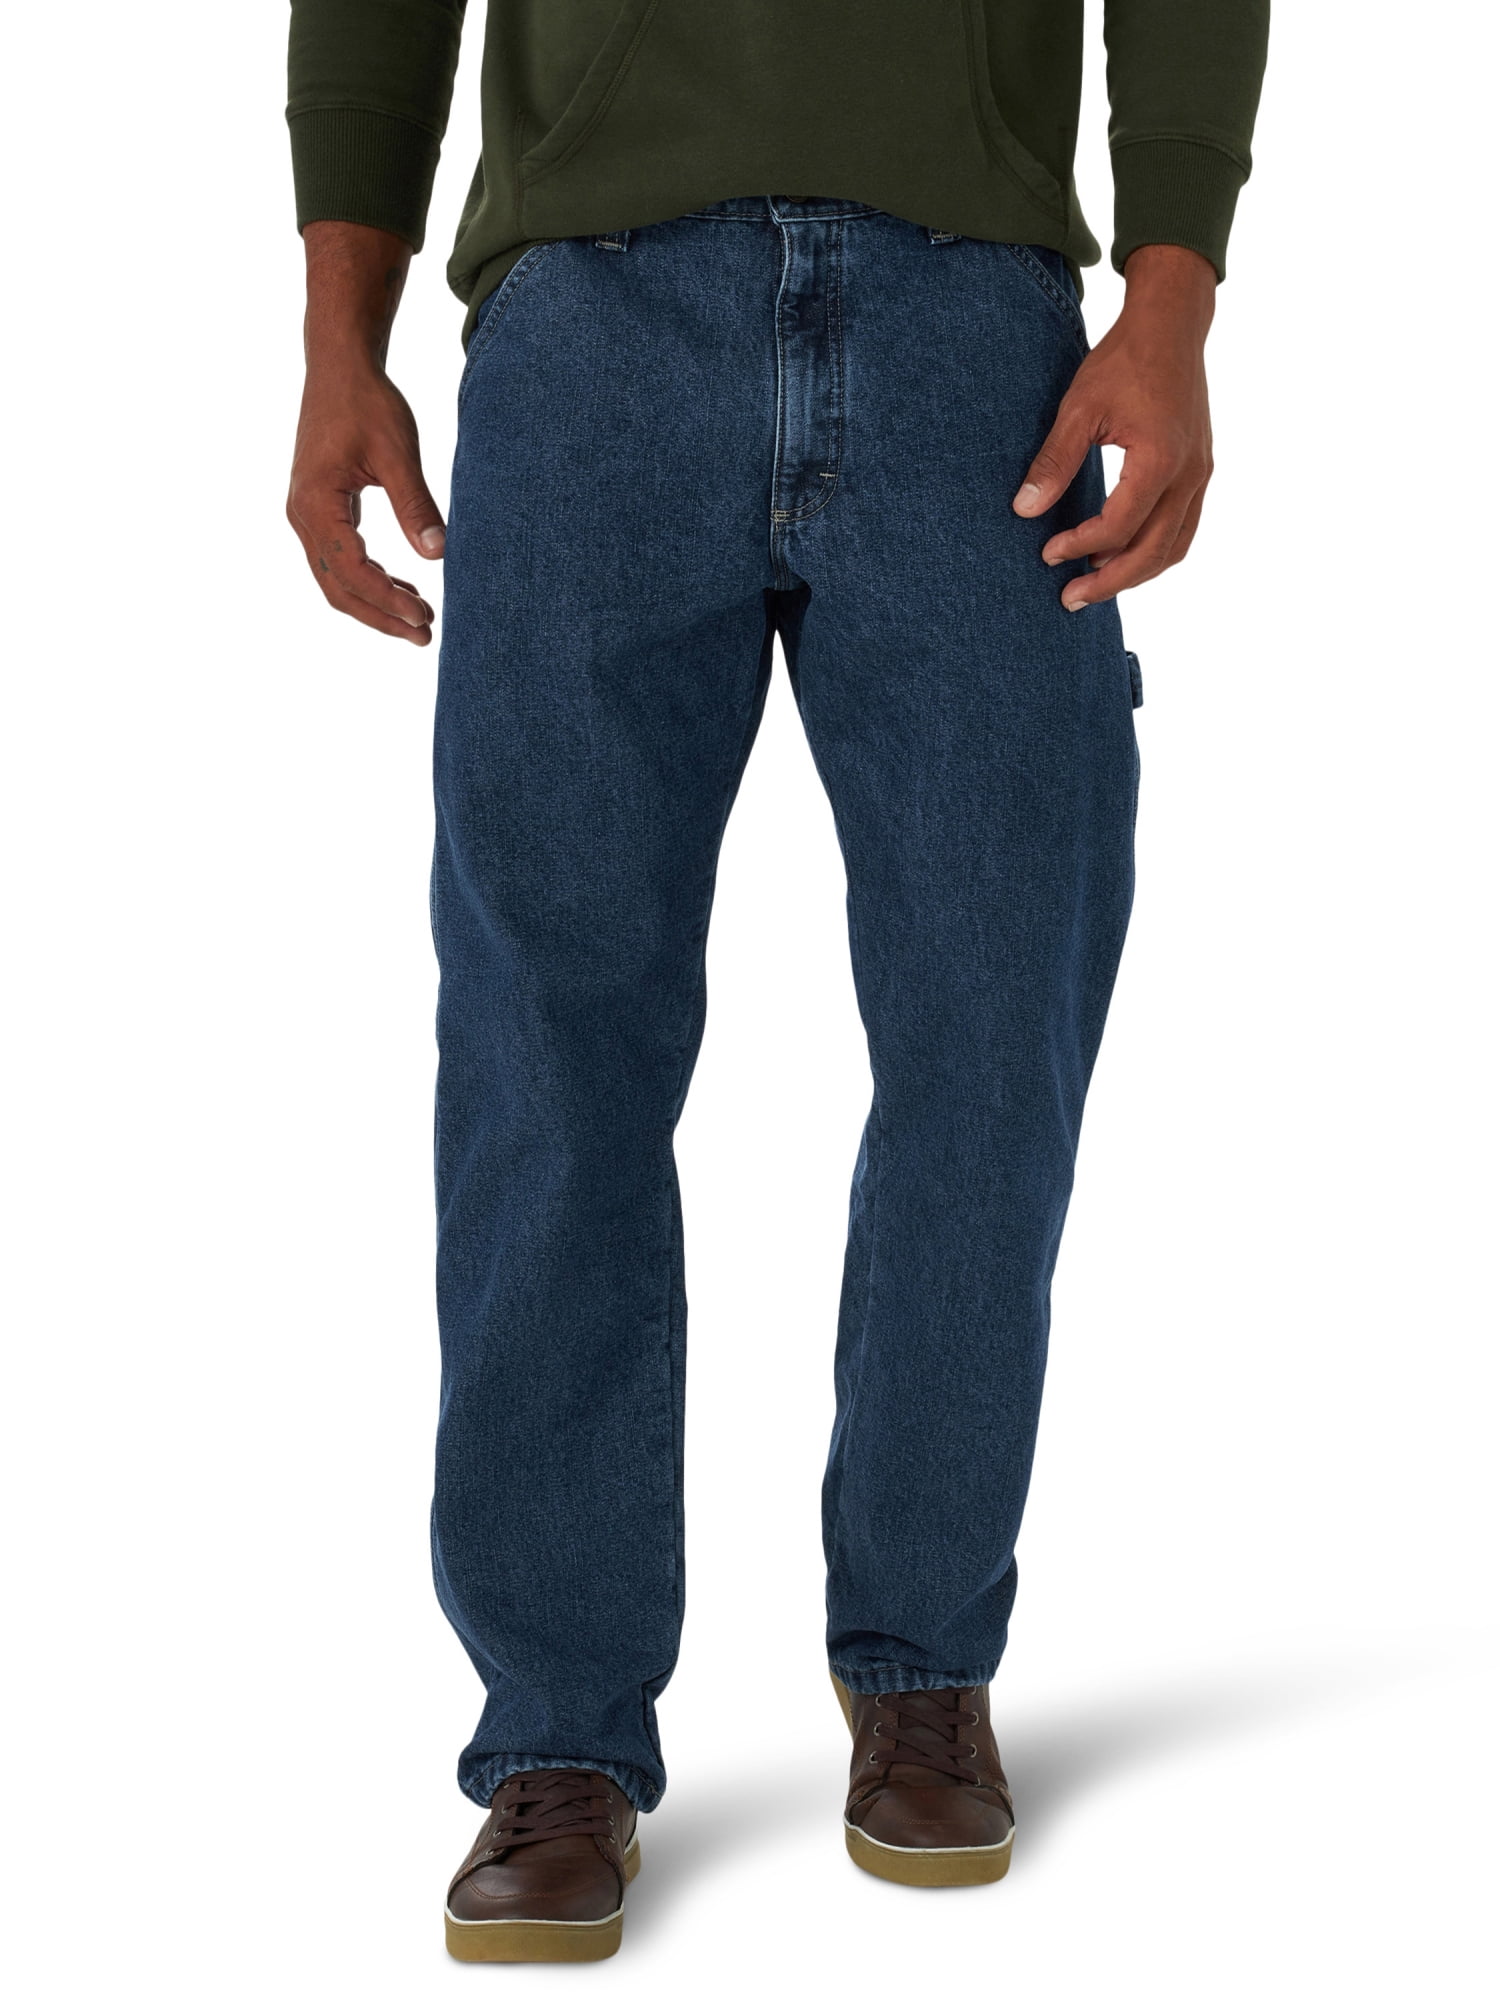 NWT MEN'S Wrangler Fleece Lined Carpenter Loose Fit Blue Jeans 94GRWST NEW 